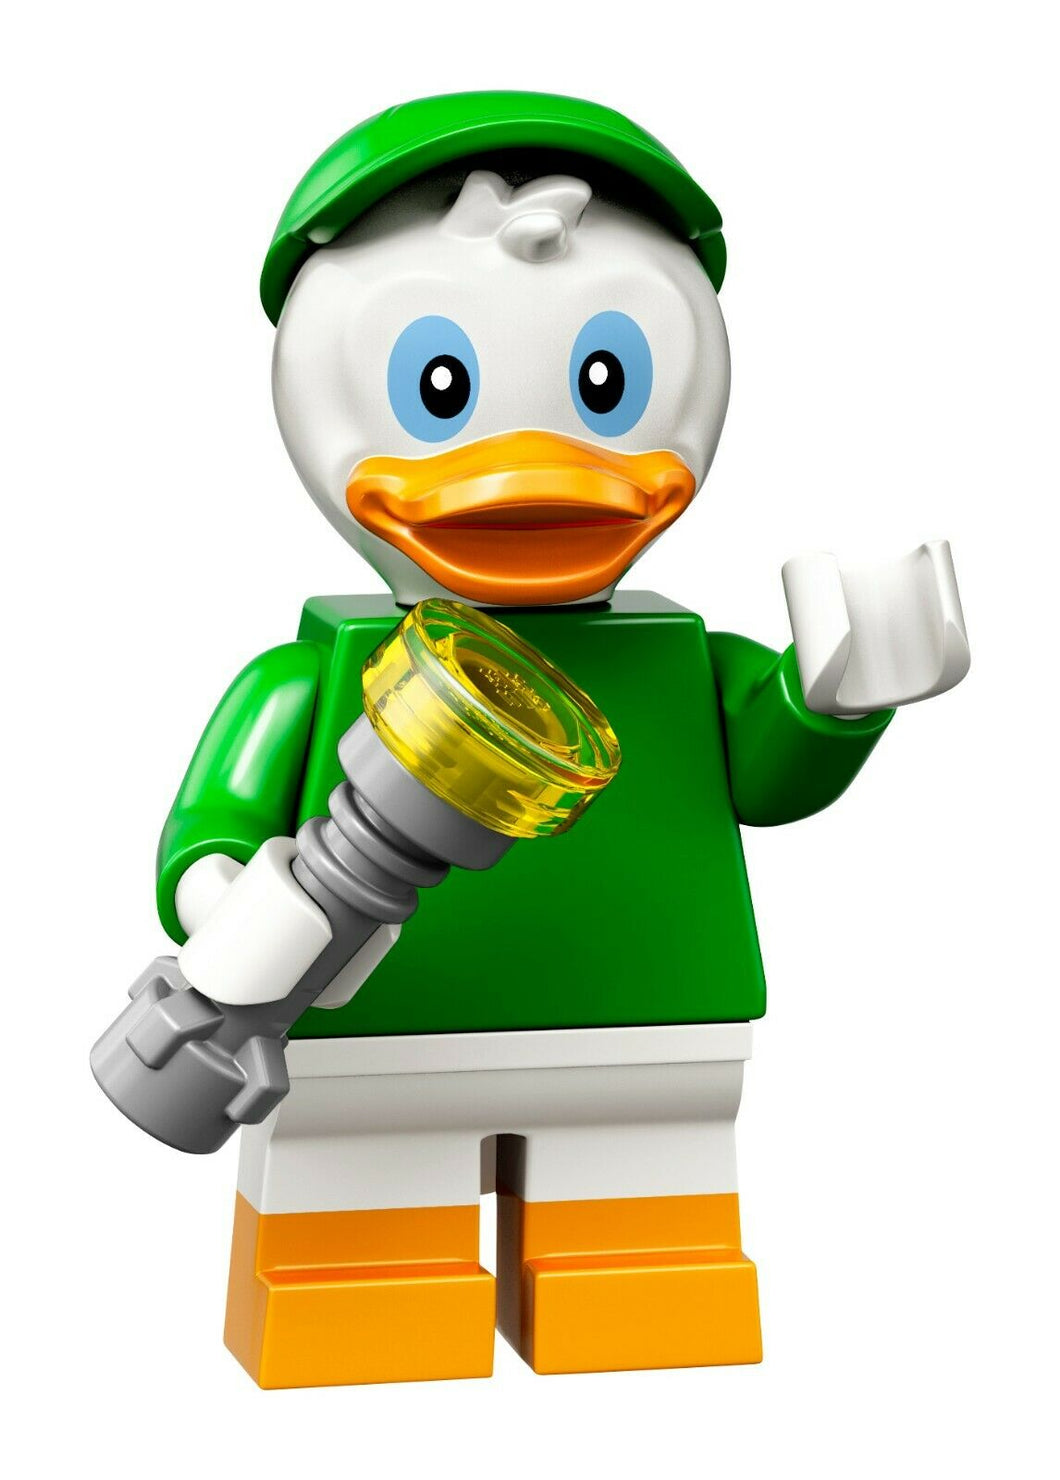 LEGO 71024 Minifigures Disney Series 2 - Louie (DuckTales)